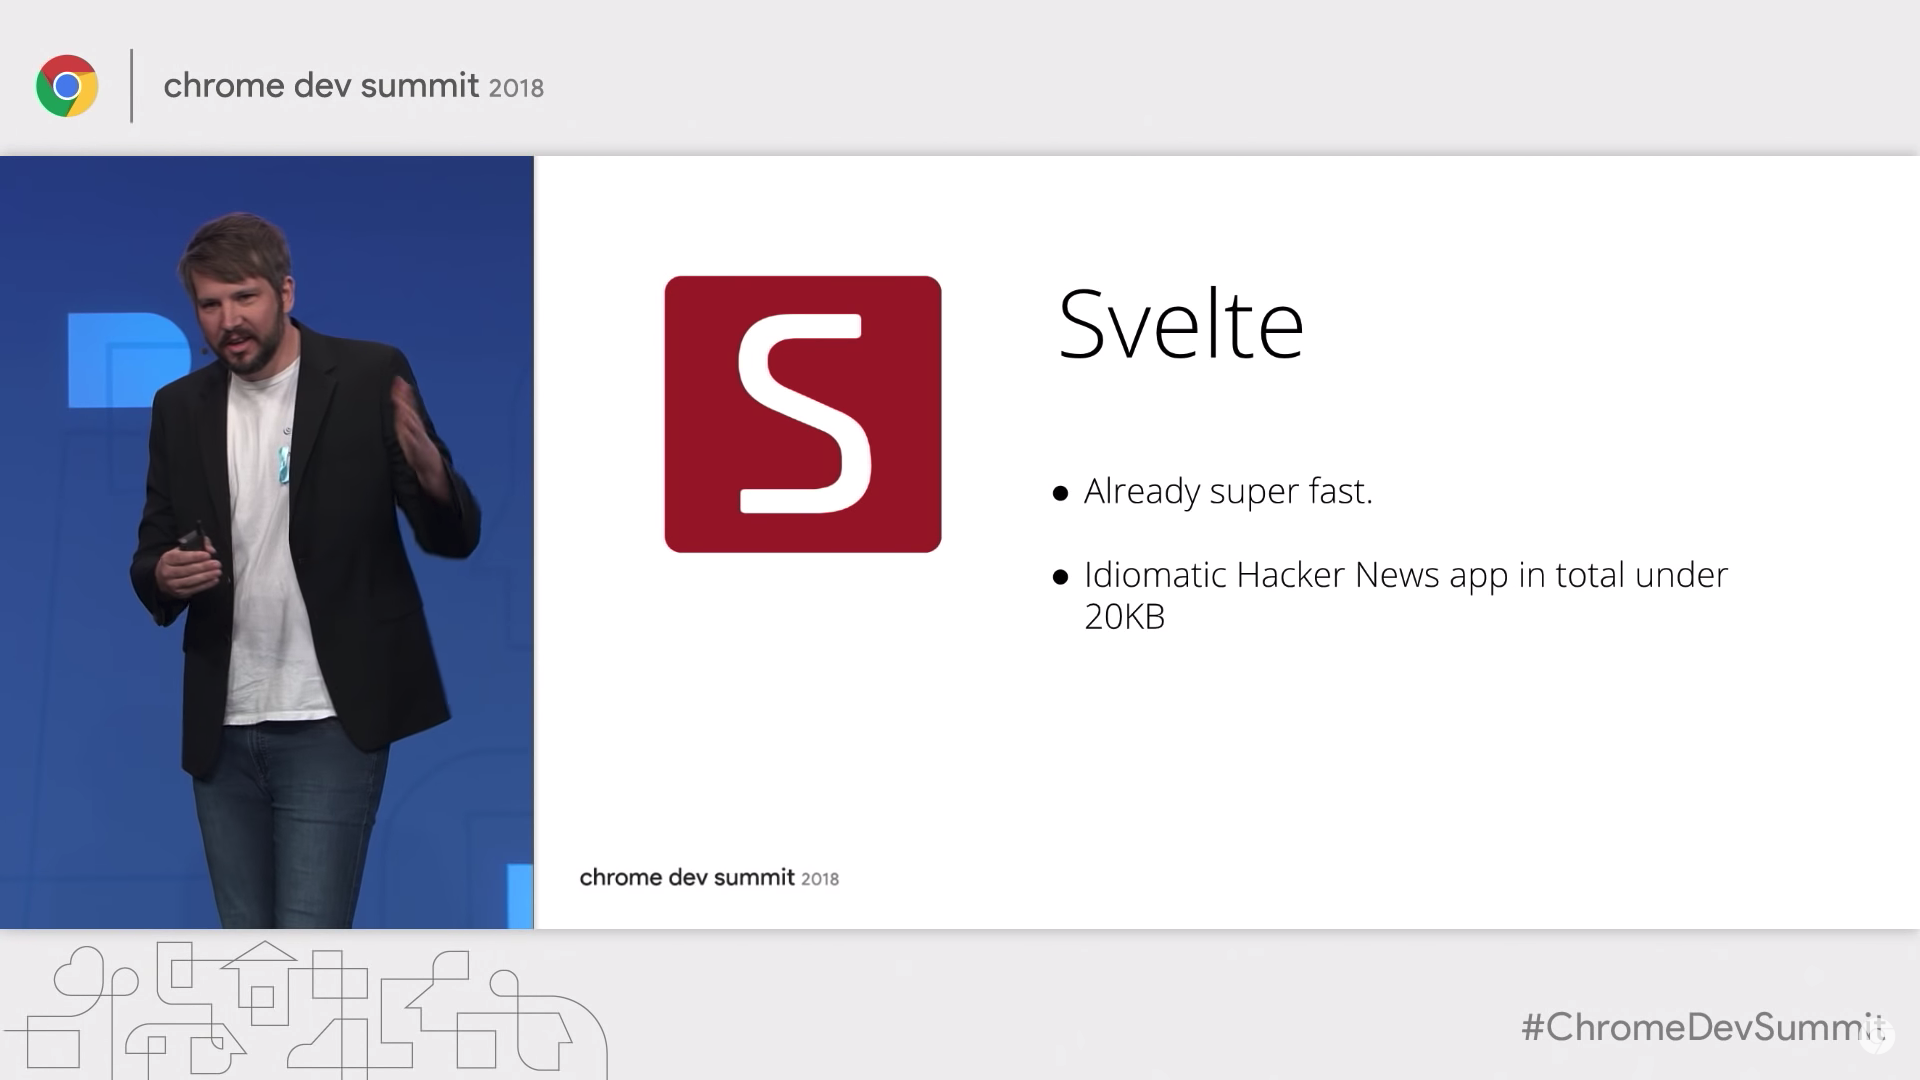 Svelte mentioned at Chrome Dev Summit 2018